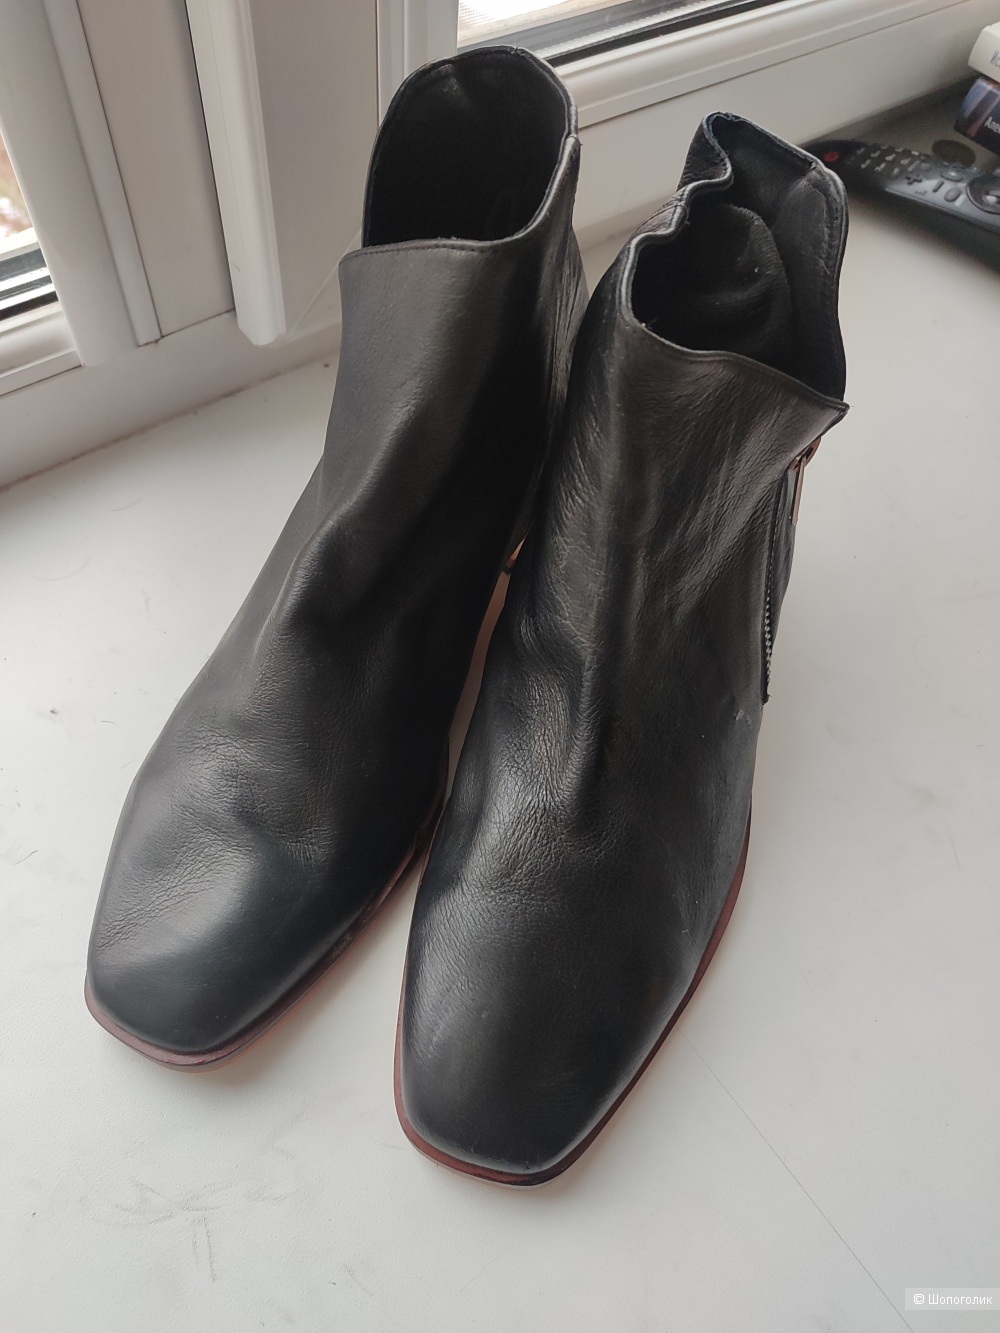 Кожаные ботинки Django &luliette размер 41